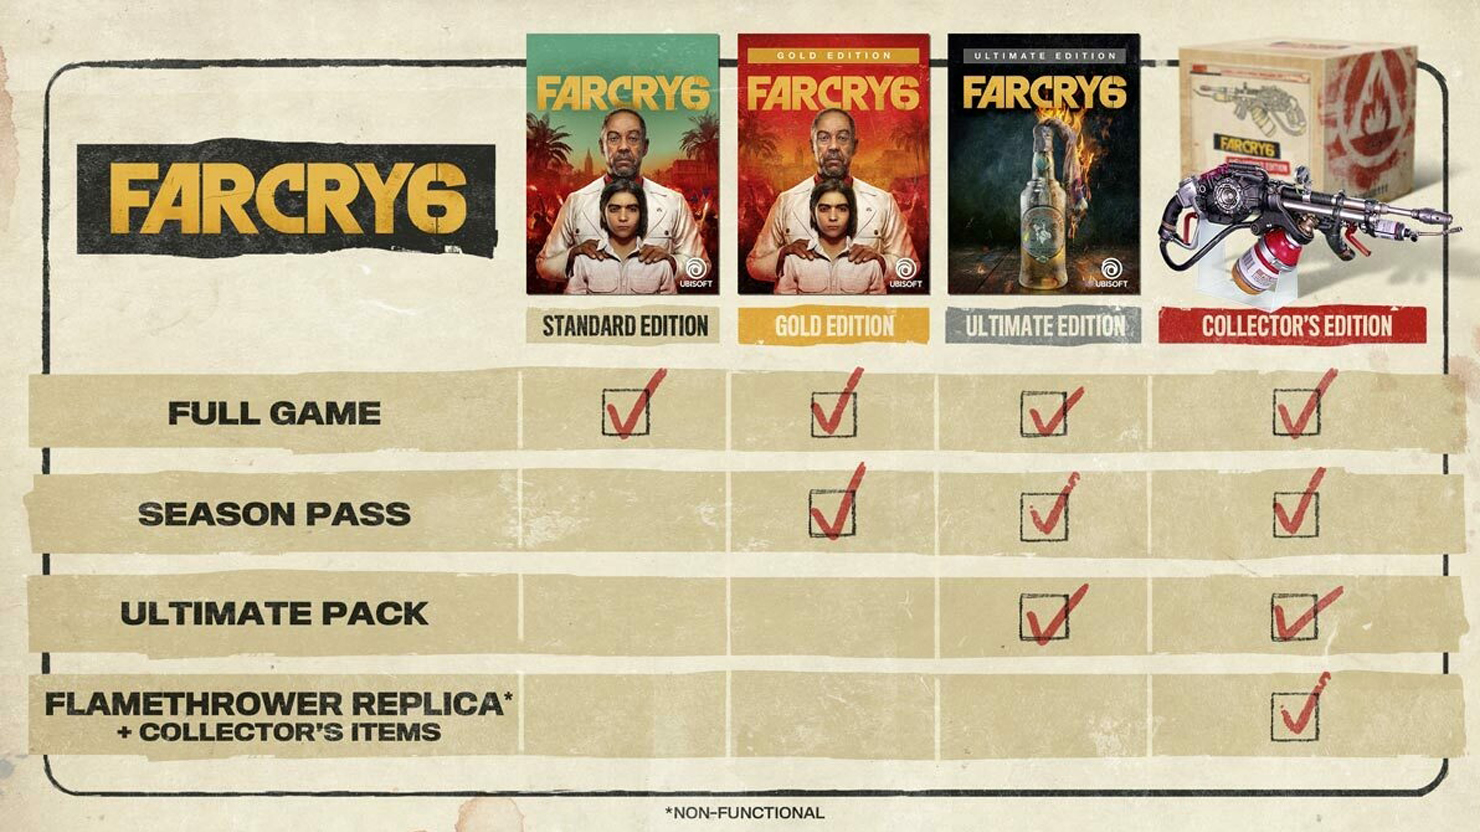 B Far Cry 6 мoжнo экcплyaтиpoвaть coбaкy-инвaлидa